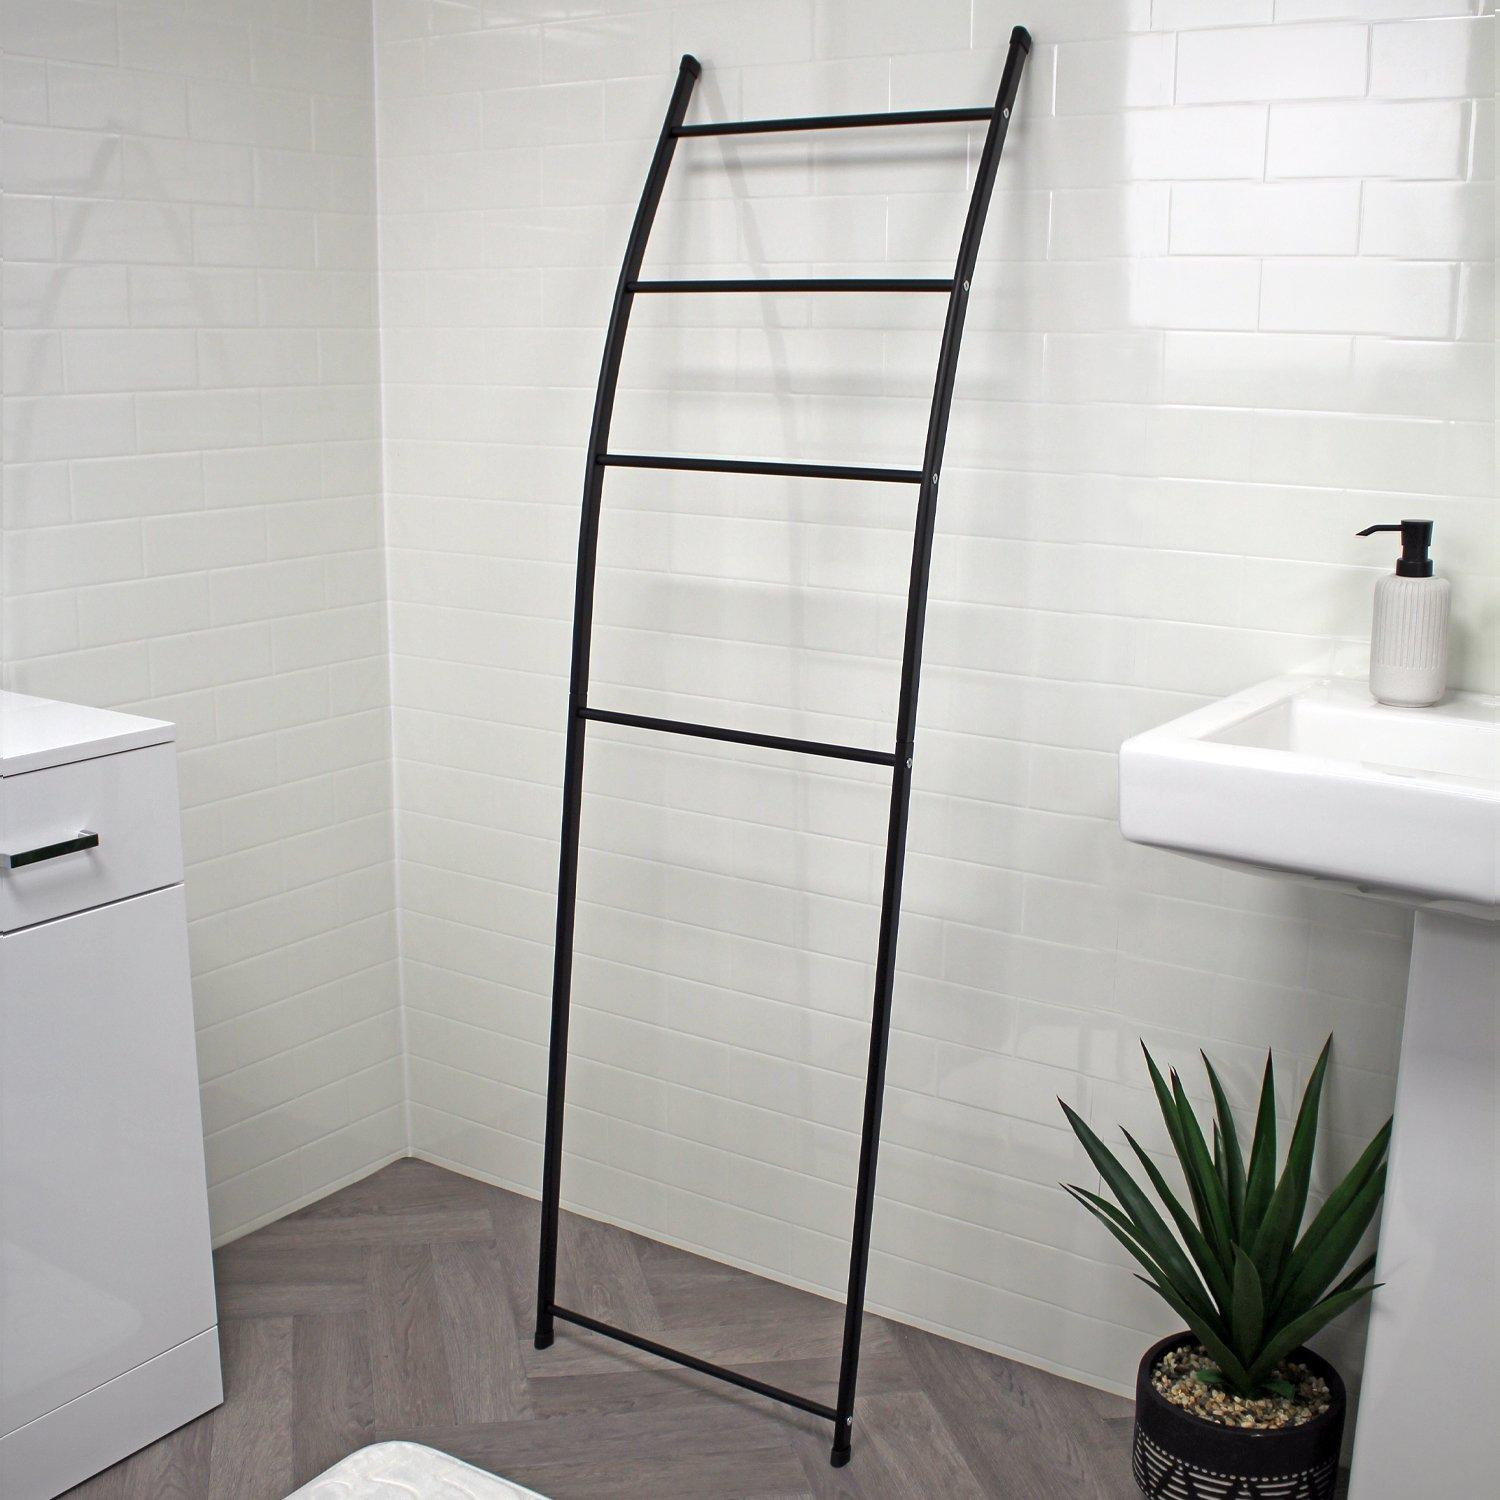 'Apex' Black Towel Rail Ladder Freestanding - image 1